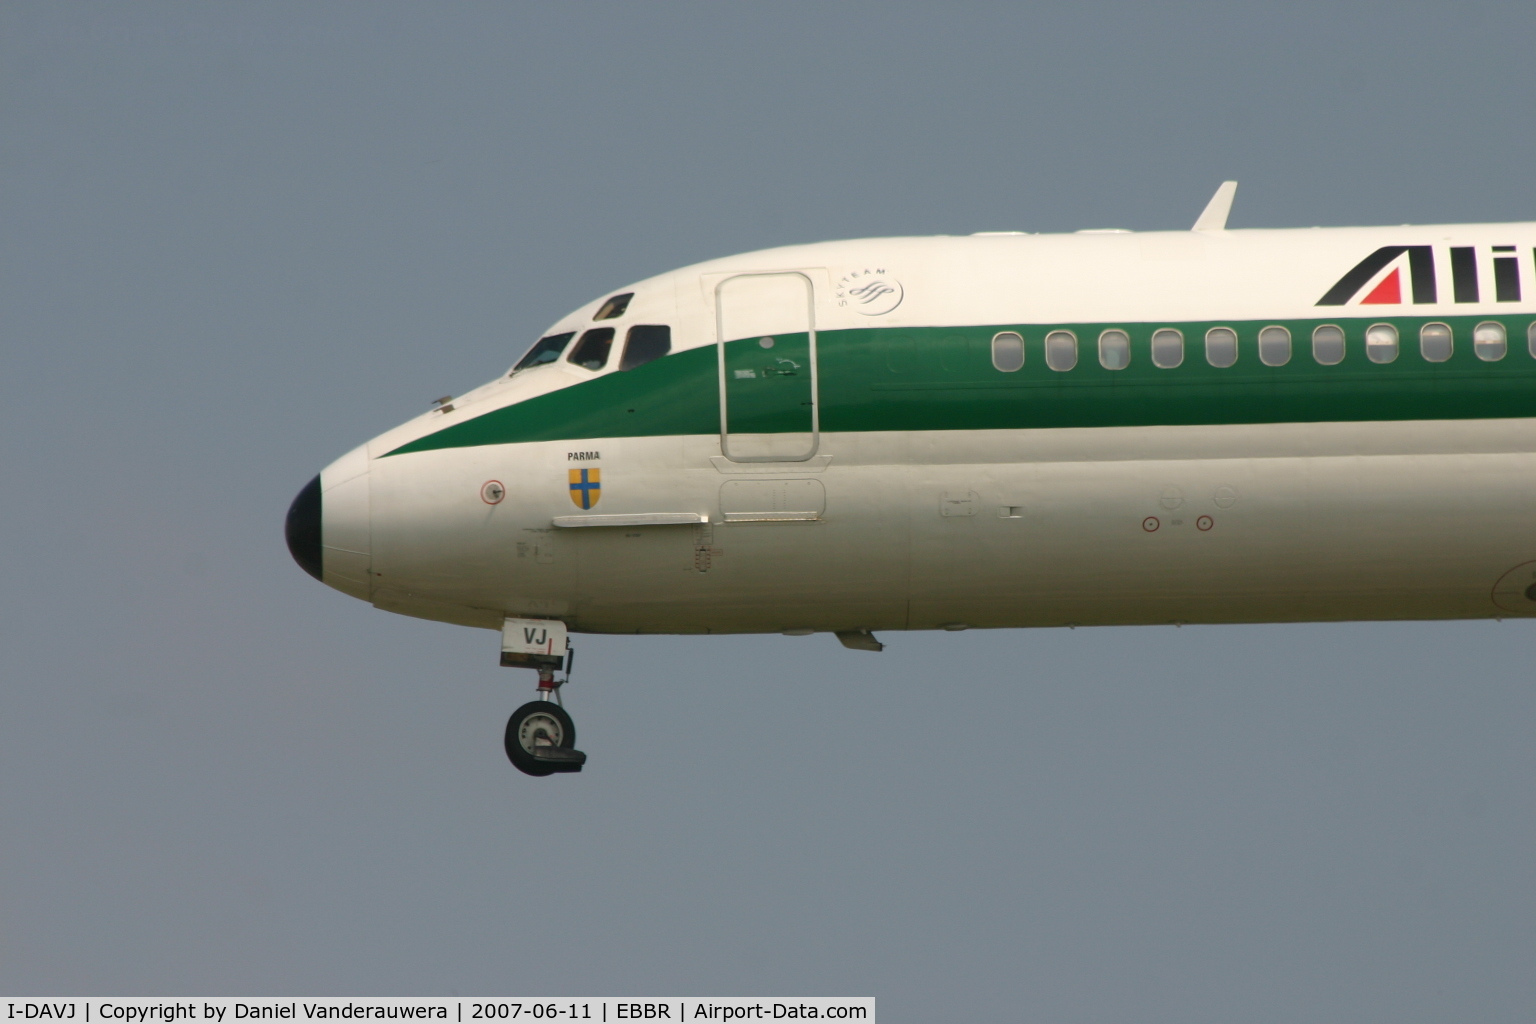 I-DAVJ, 1987 McDonnell Douglas MD-82 (DC-9-82) C/N 49431, arrival of flight AZ146 to rwy 25L